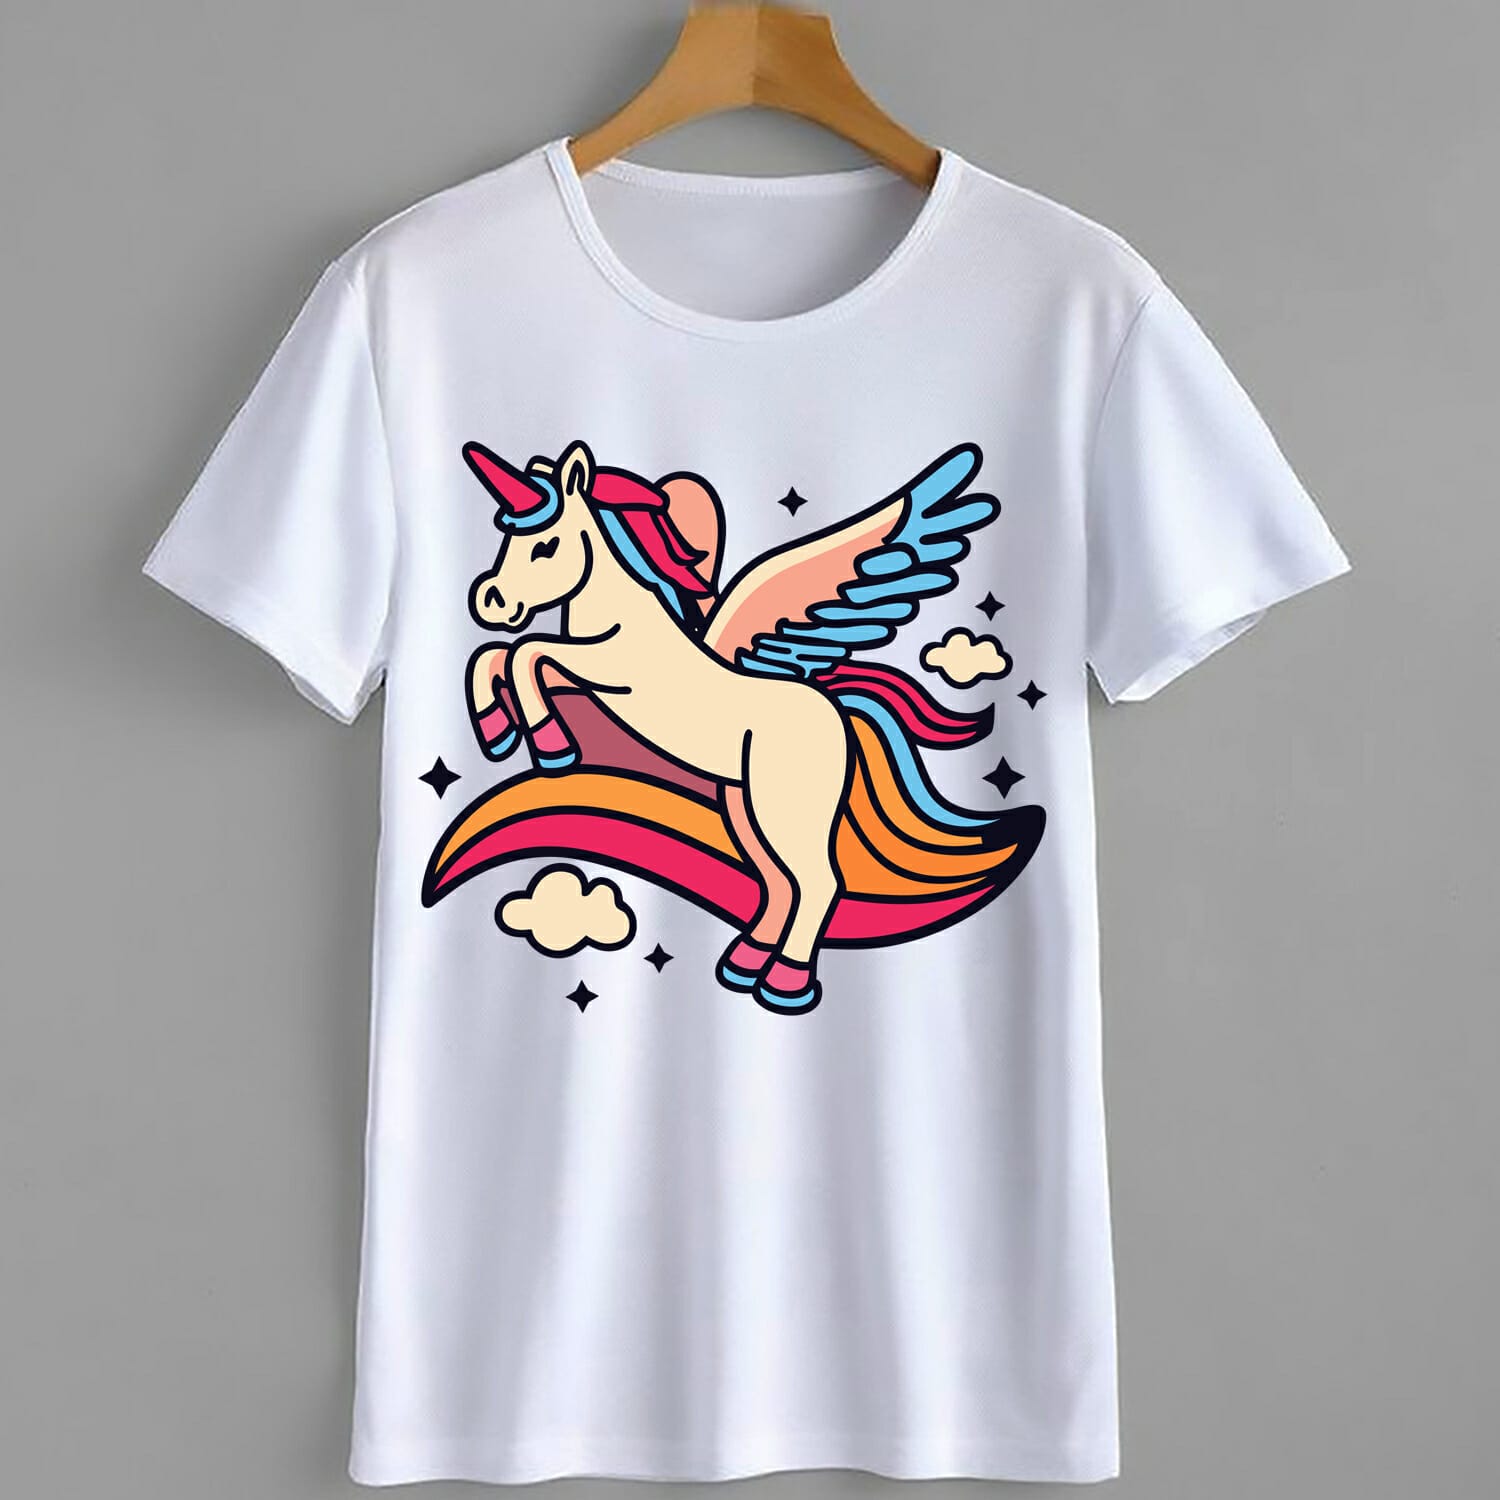 Rainbow Unicorn T-Shirt Design for kids